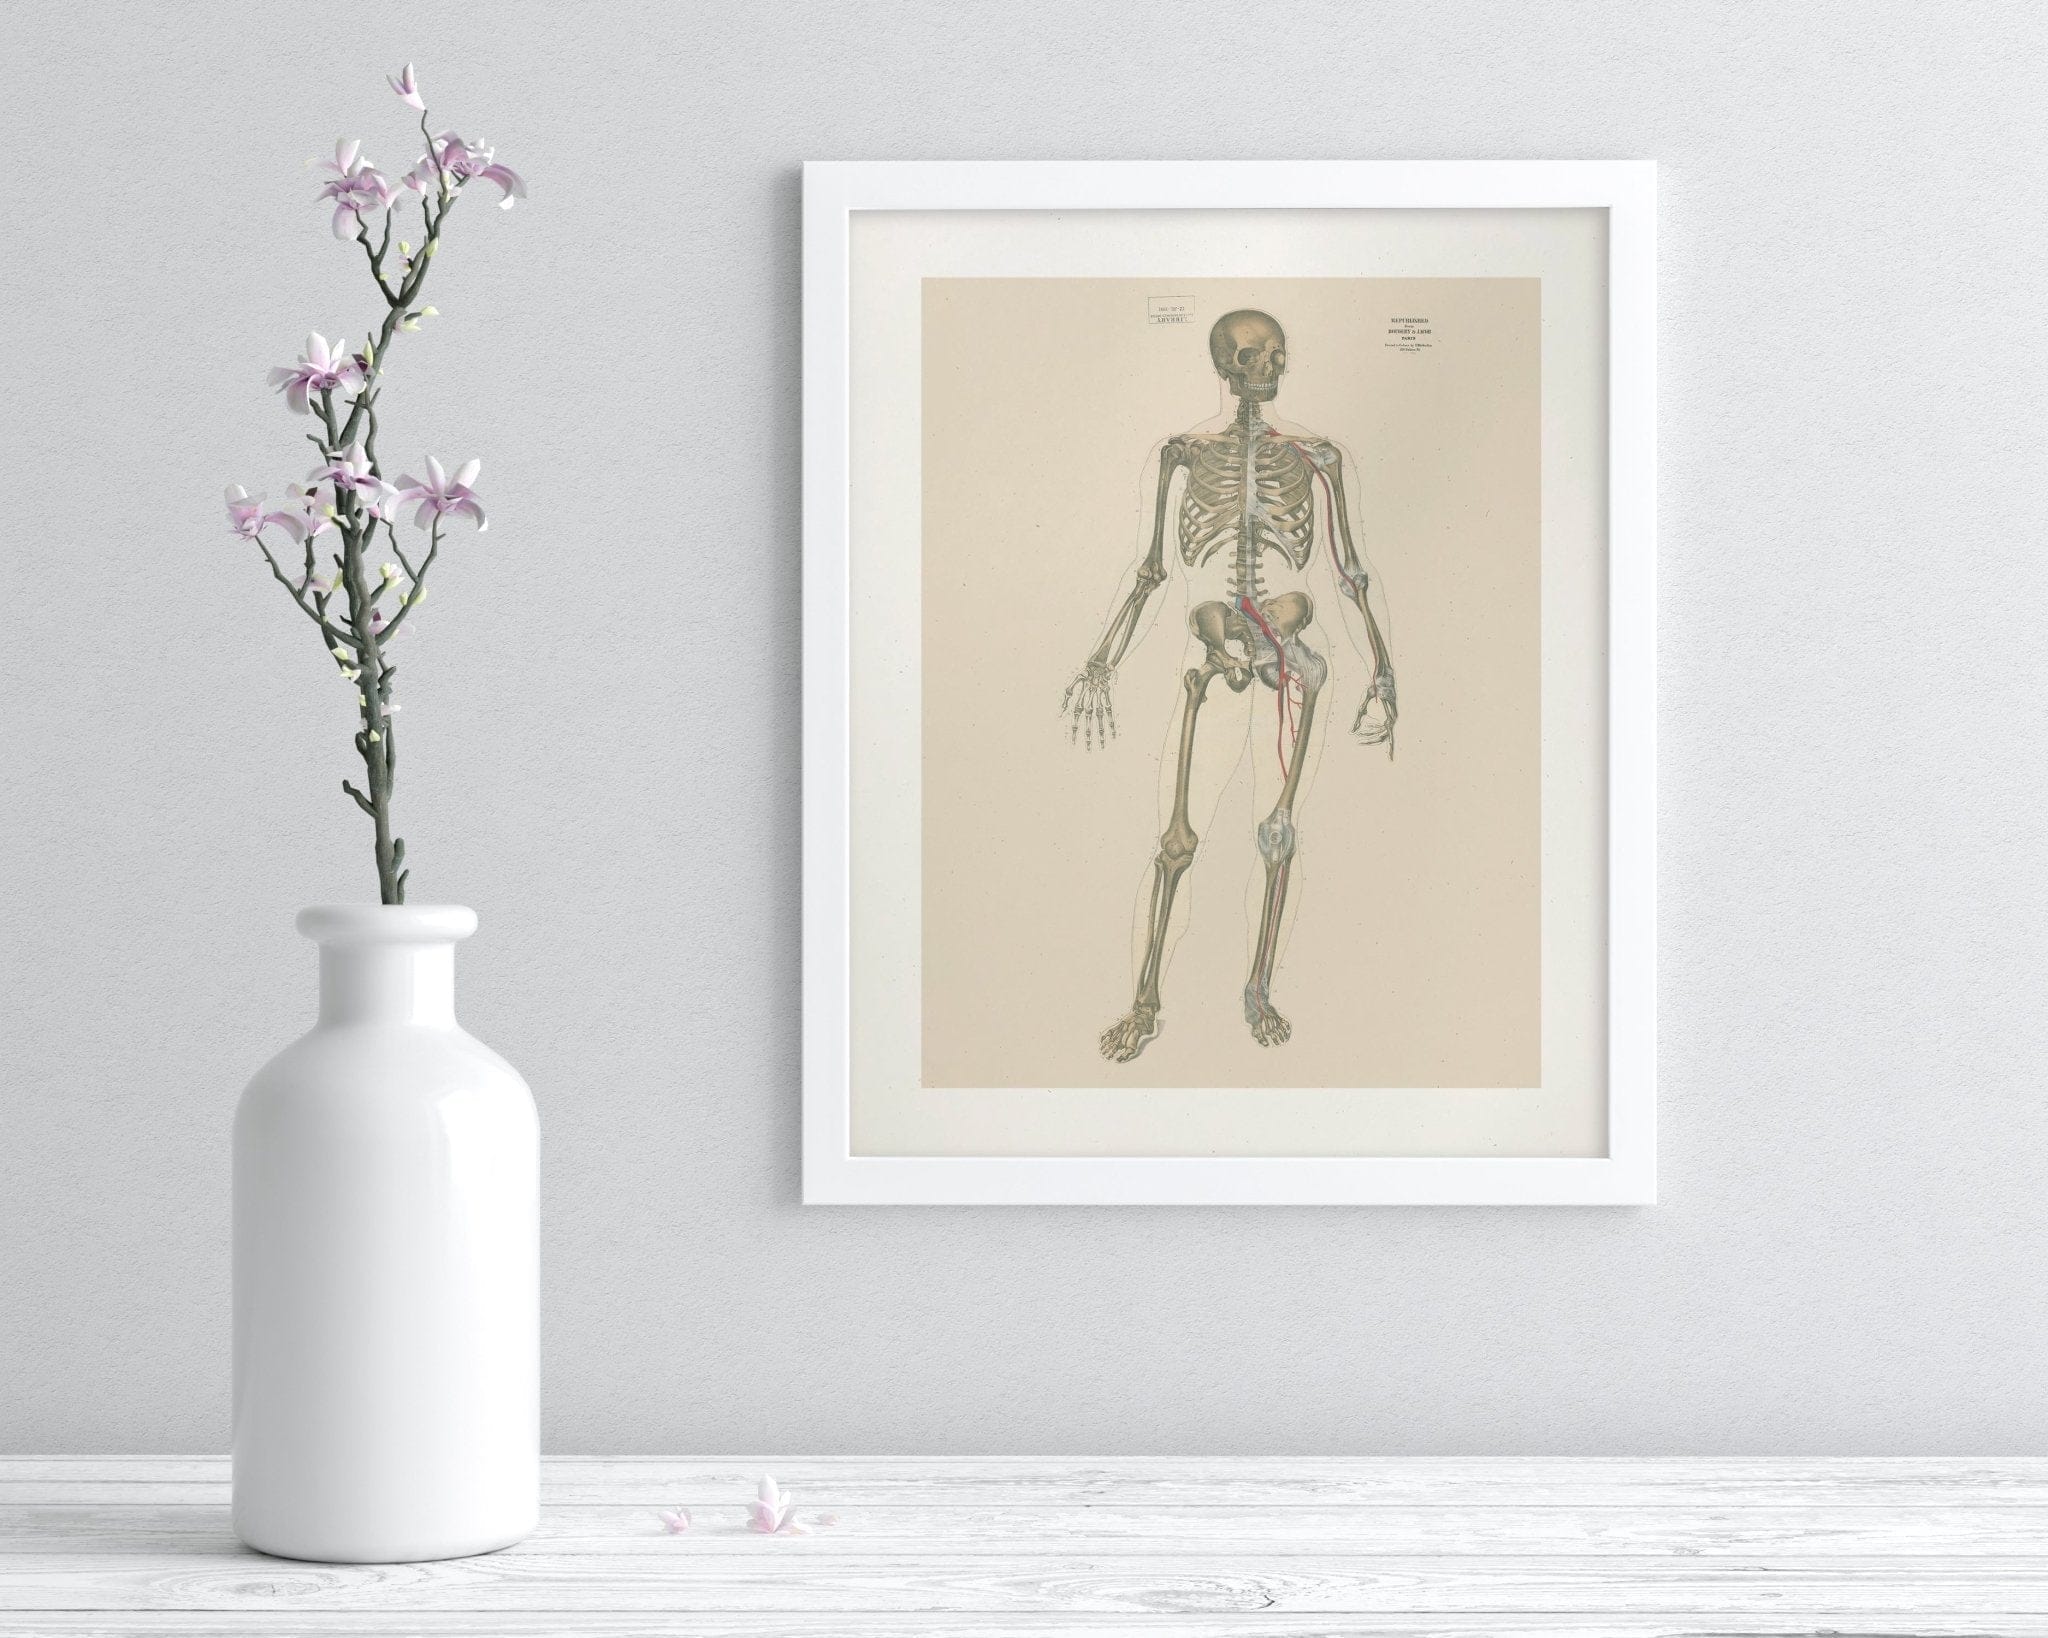 Skeleton Anatomy Museum Print Cognitive Surplus